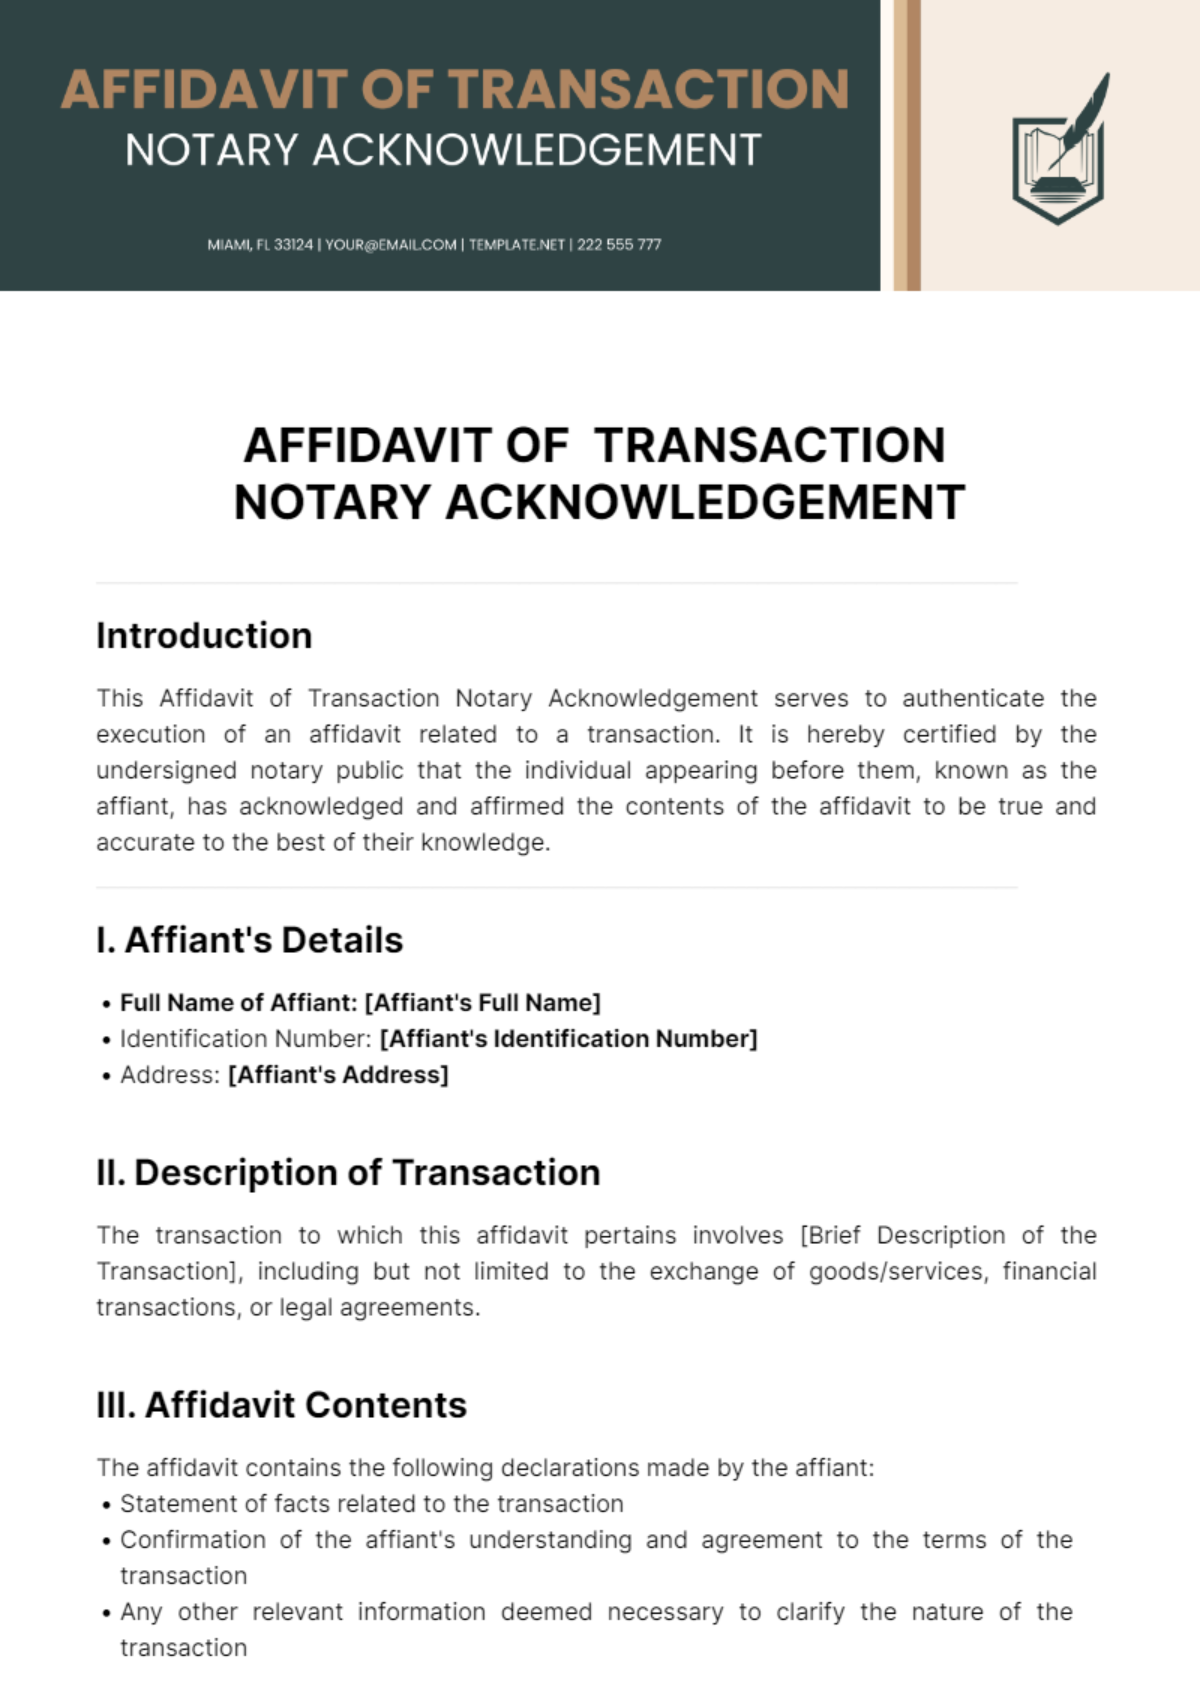 Free Affidavit Of Transaction Notary Acknowledgement Template